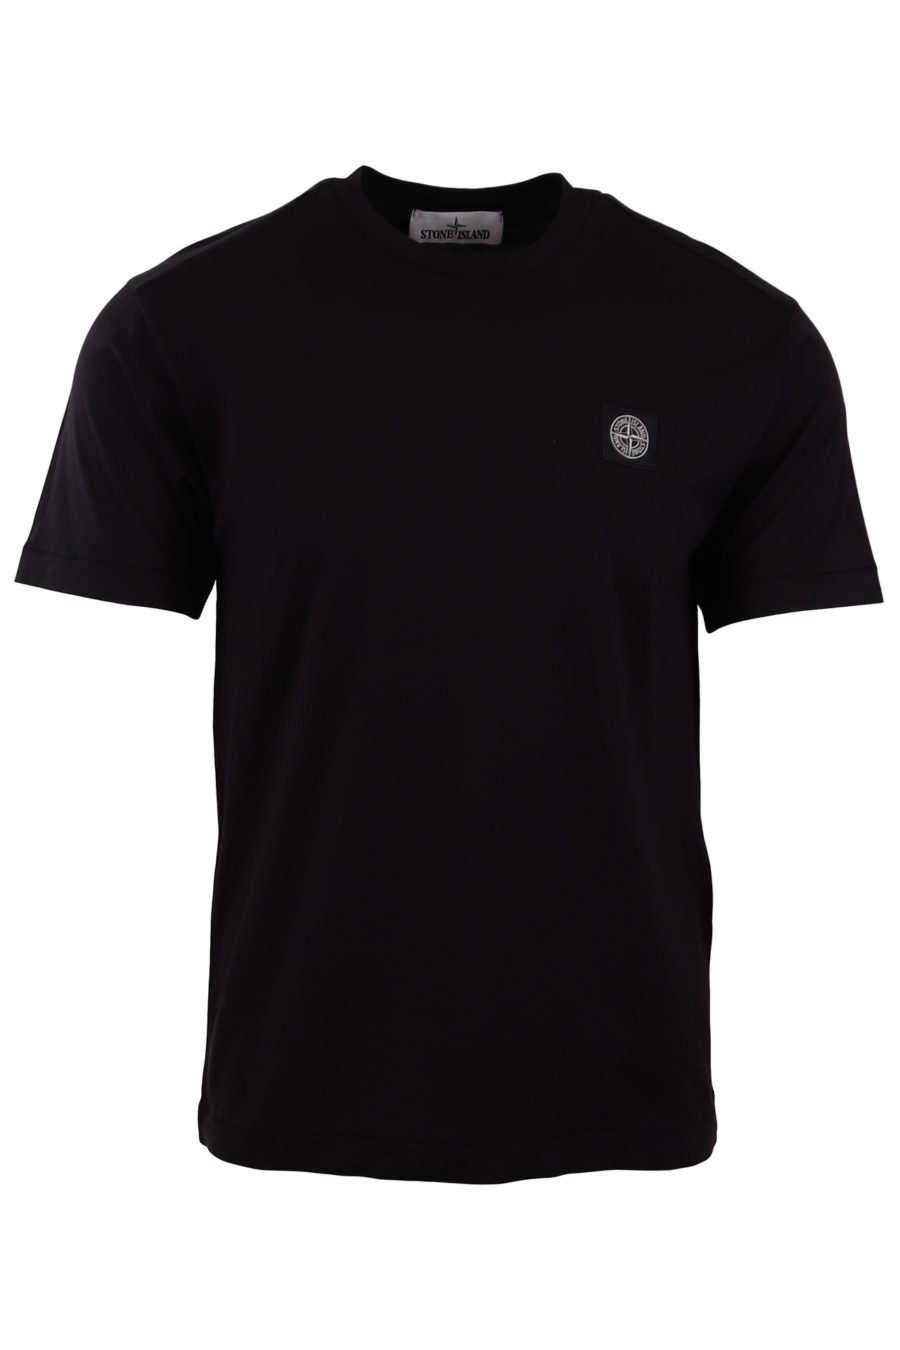 Stone Island black T-shirt with logo patch - 37c9665dce837bfb4b296259c803760f430887e5